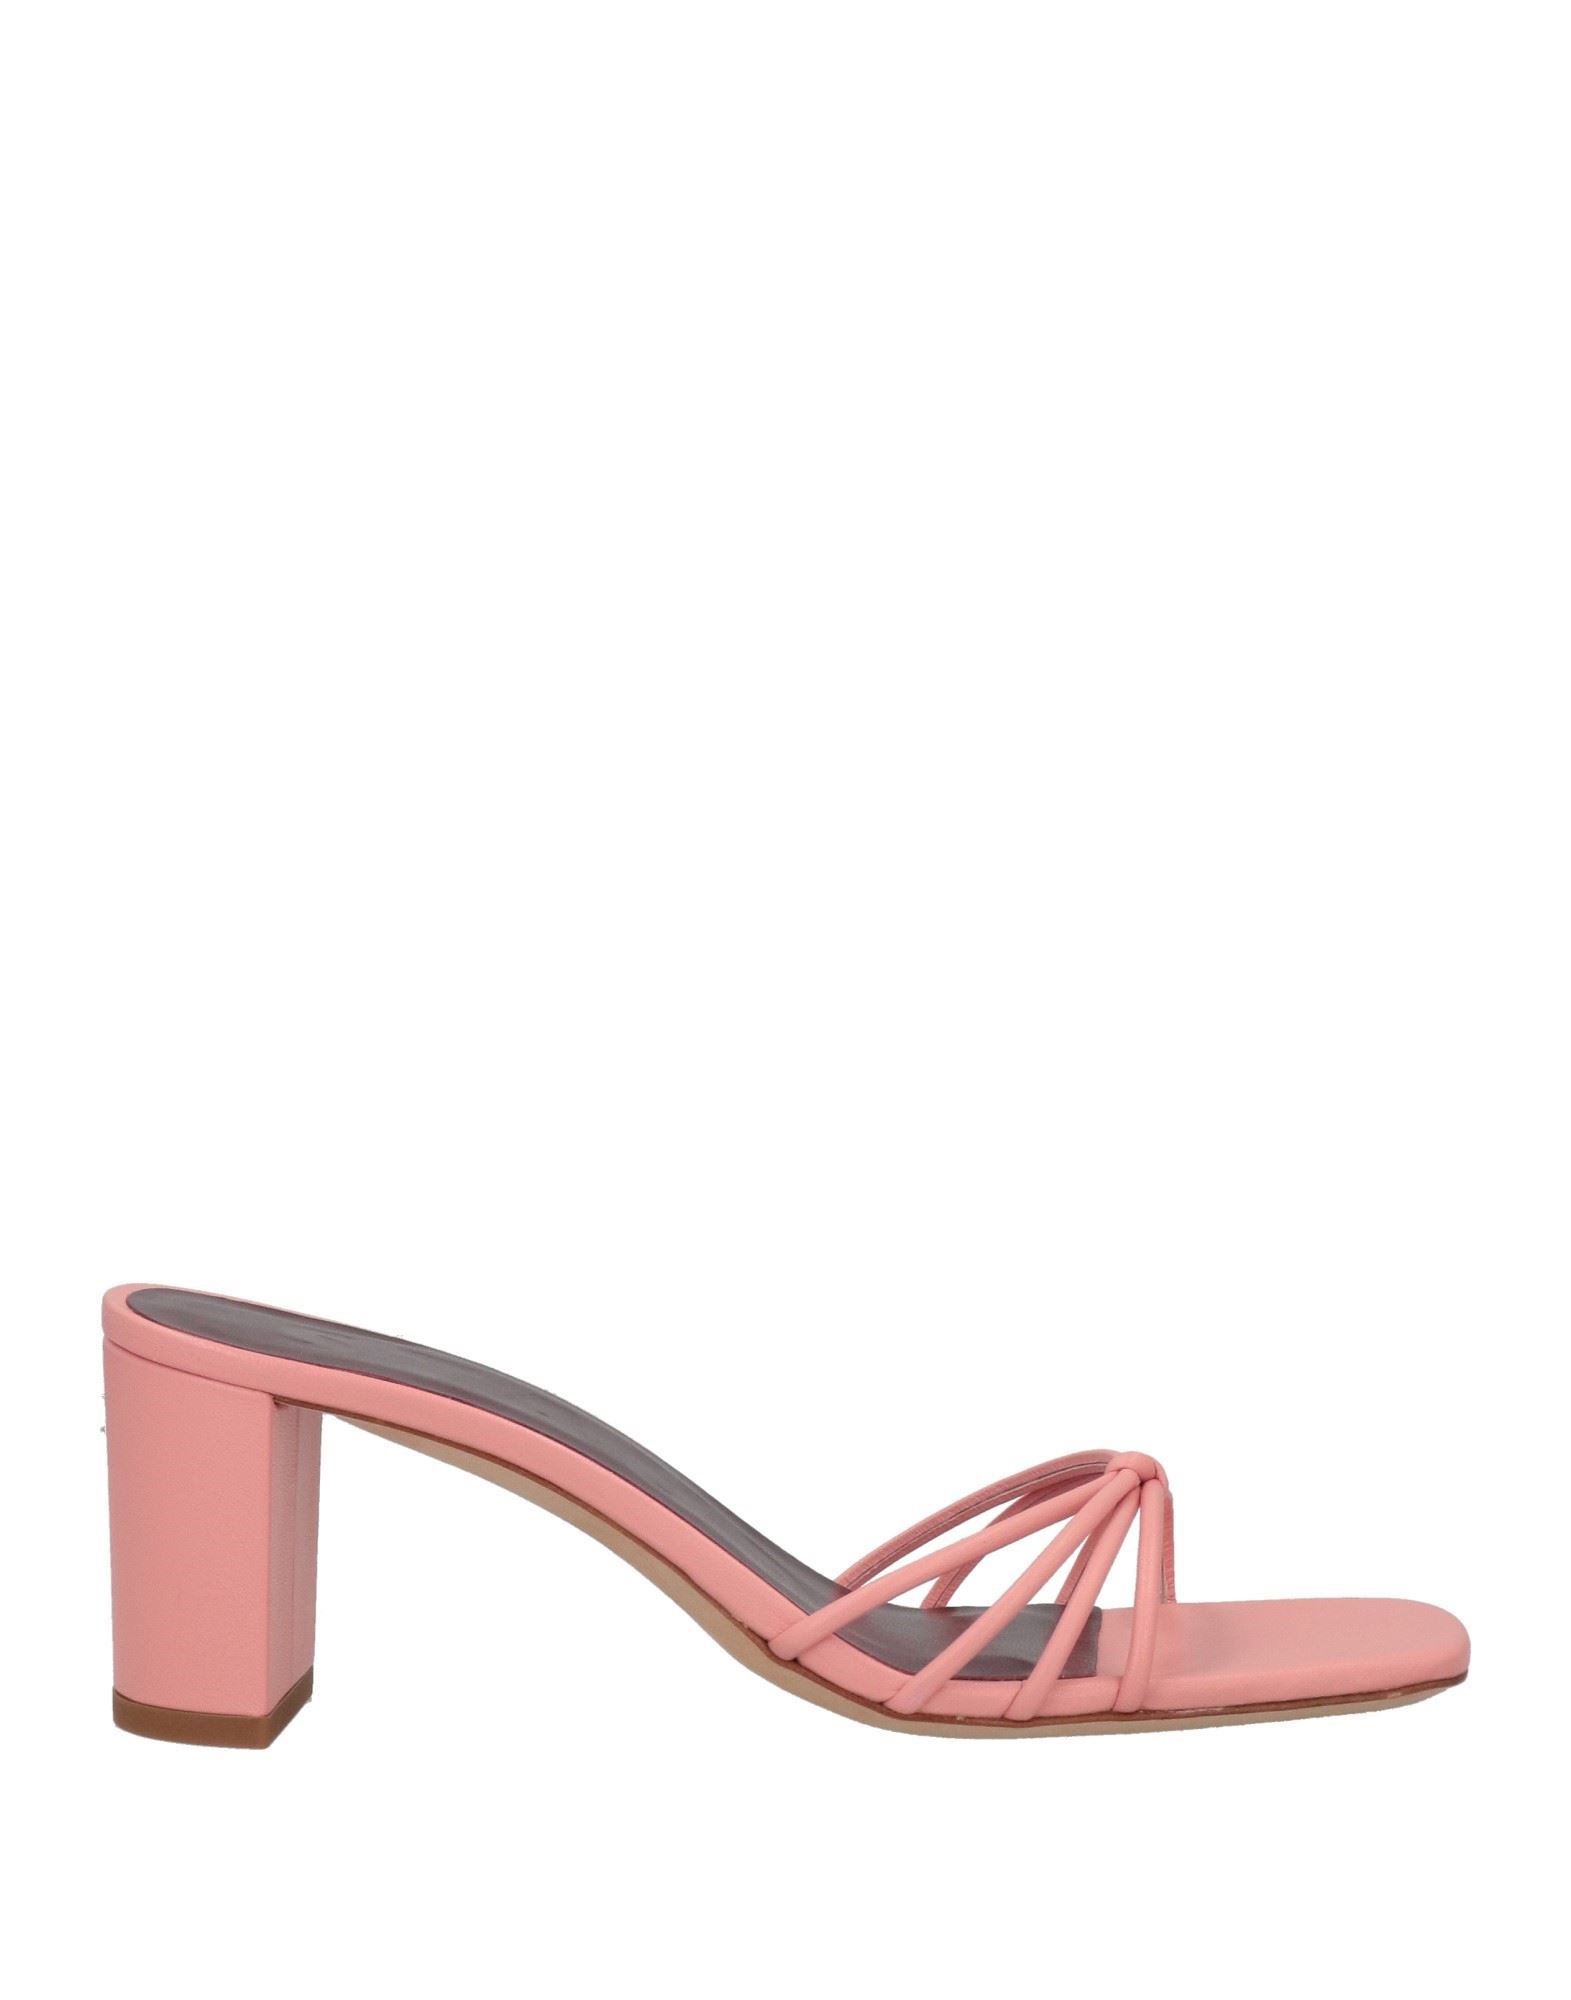 Staud Sandals In Pink